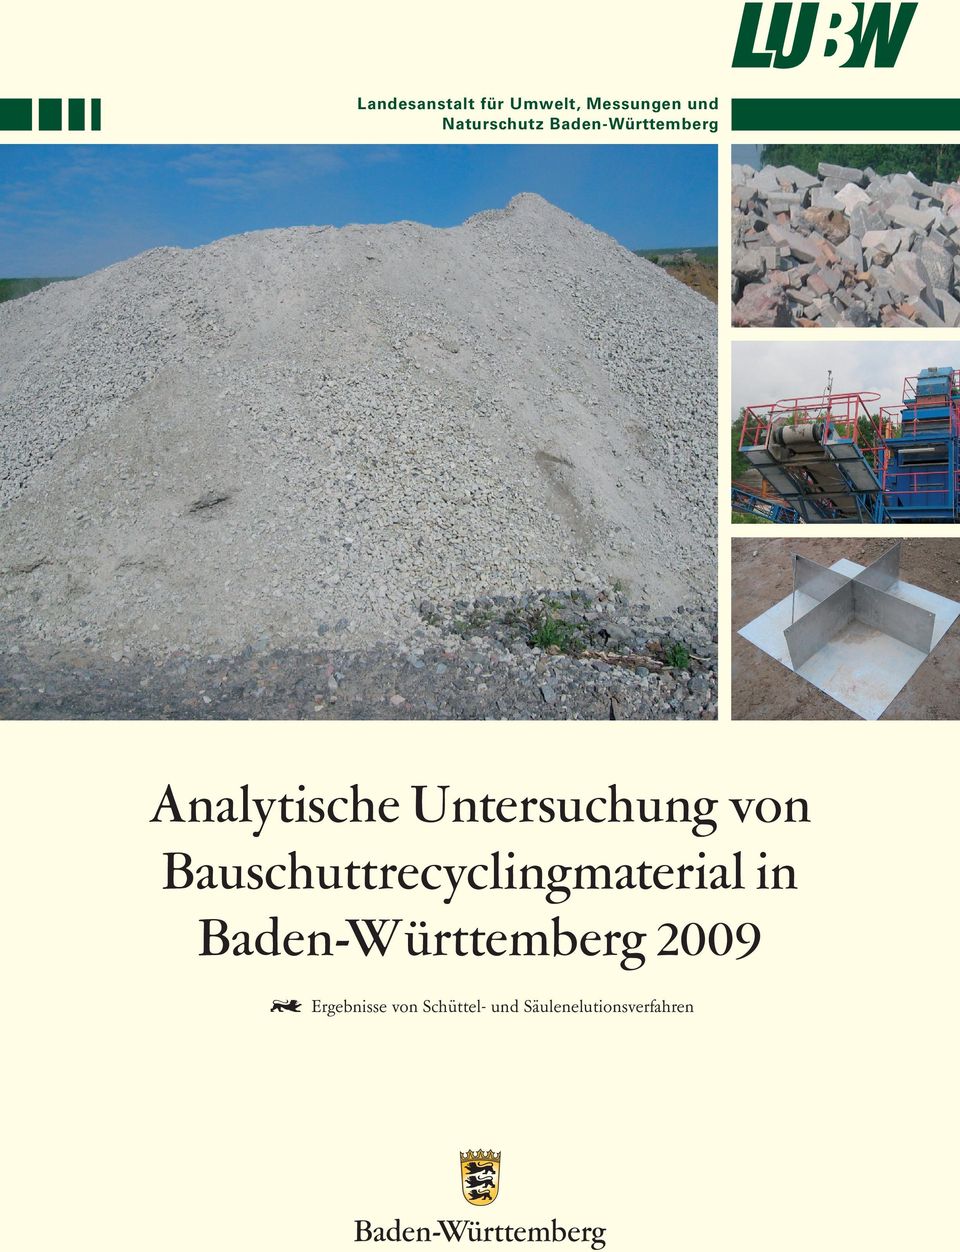 Bauschuttrecyclingmaterial in Baden-Württemberg